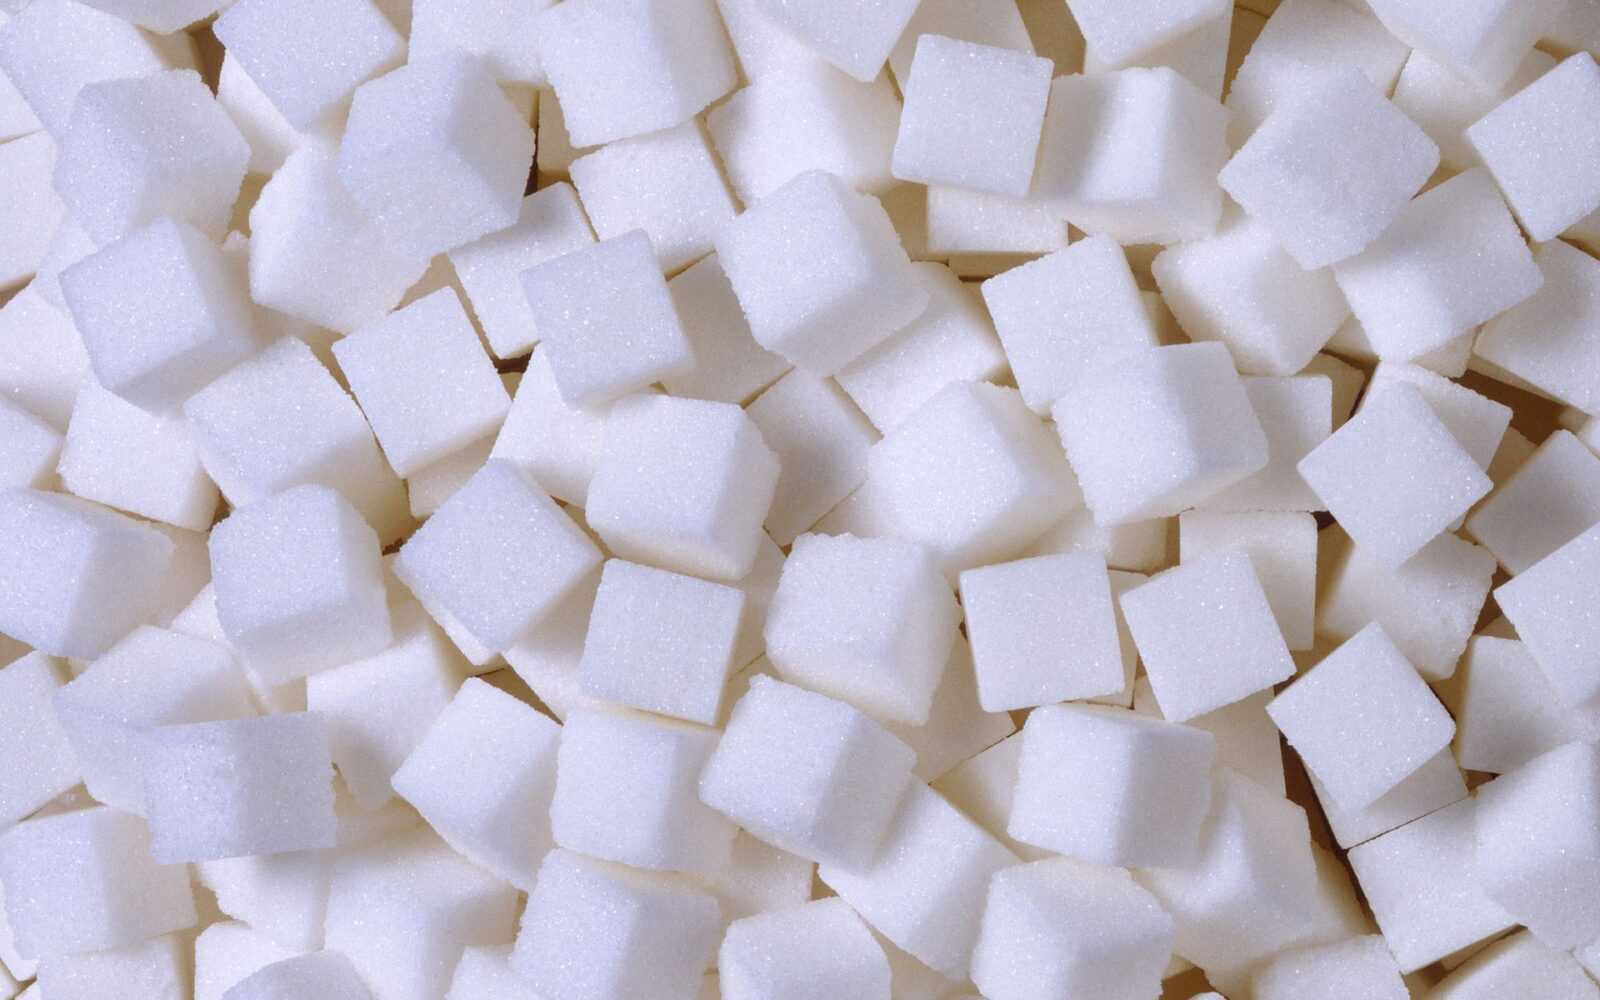 l'aforisma zucchero zollette bianco